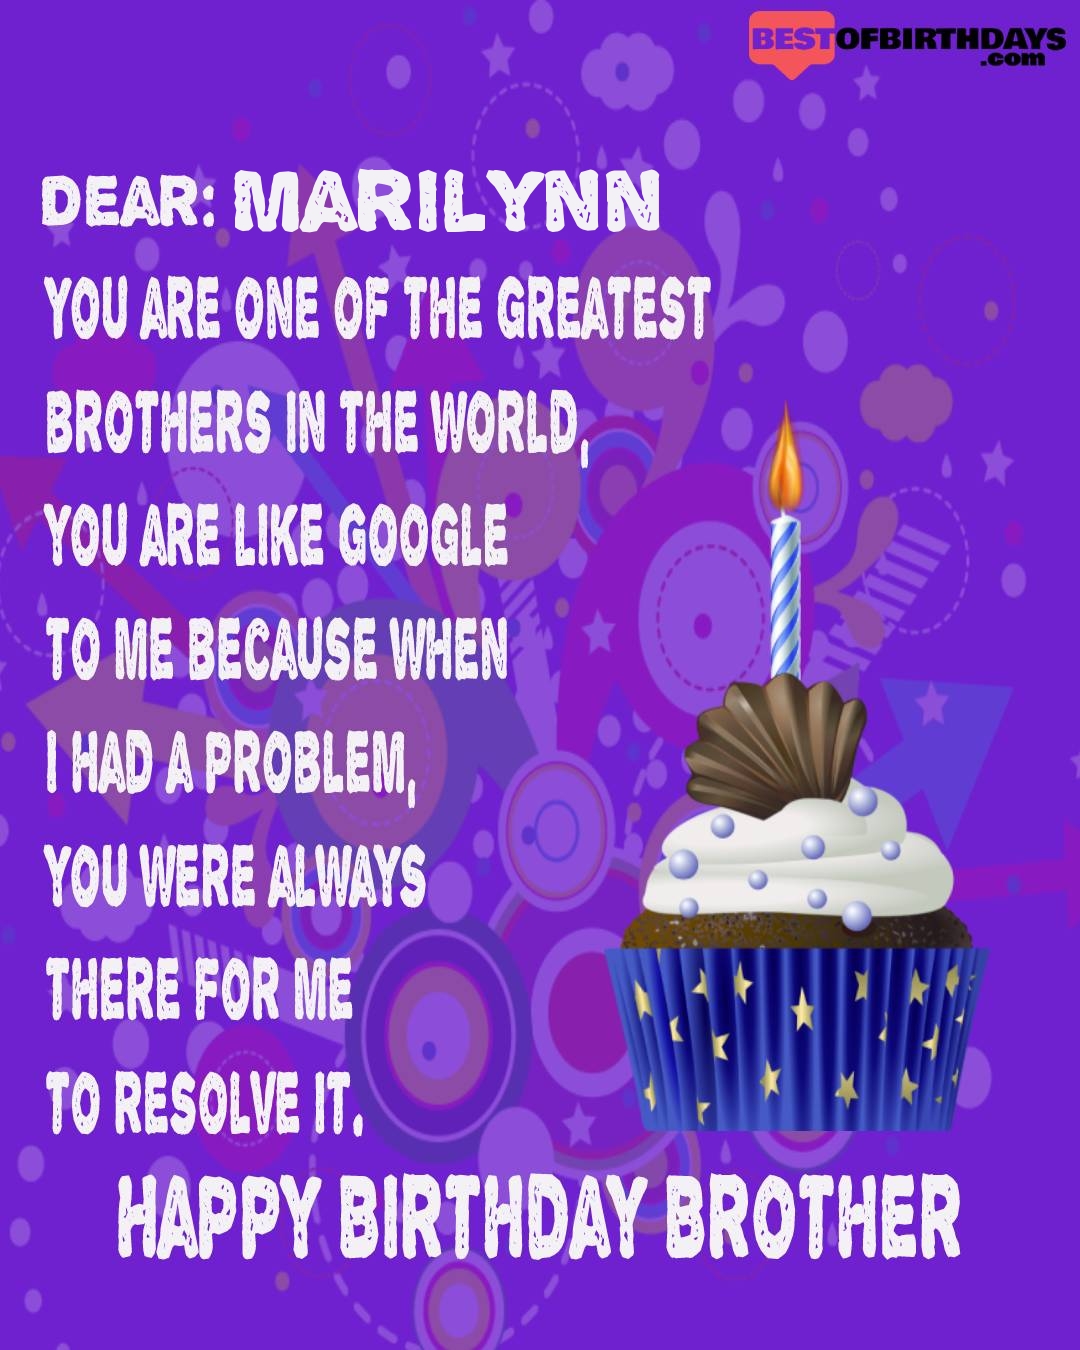 Happy birthday marilynn bhai brother bro